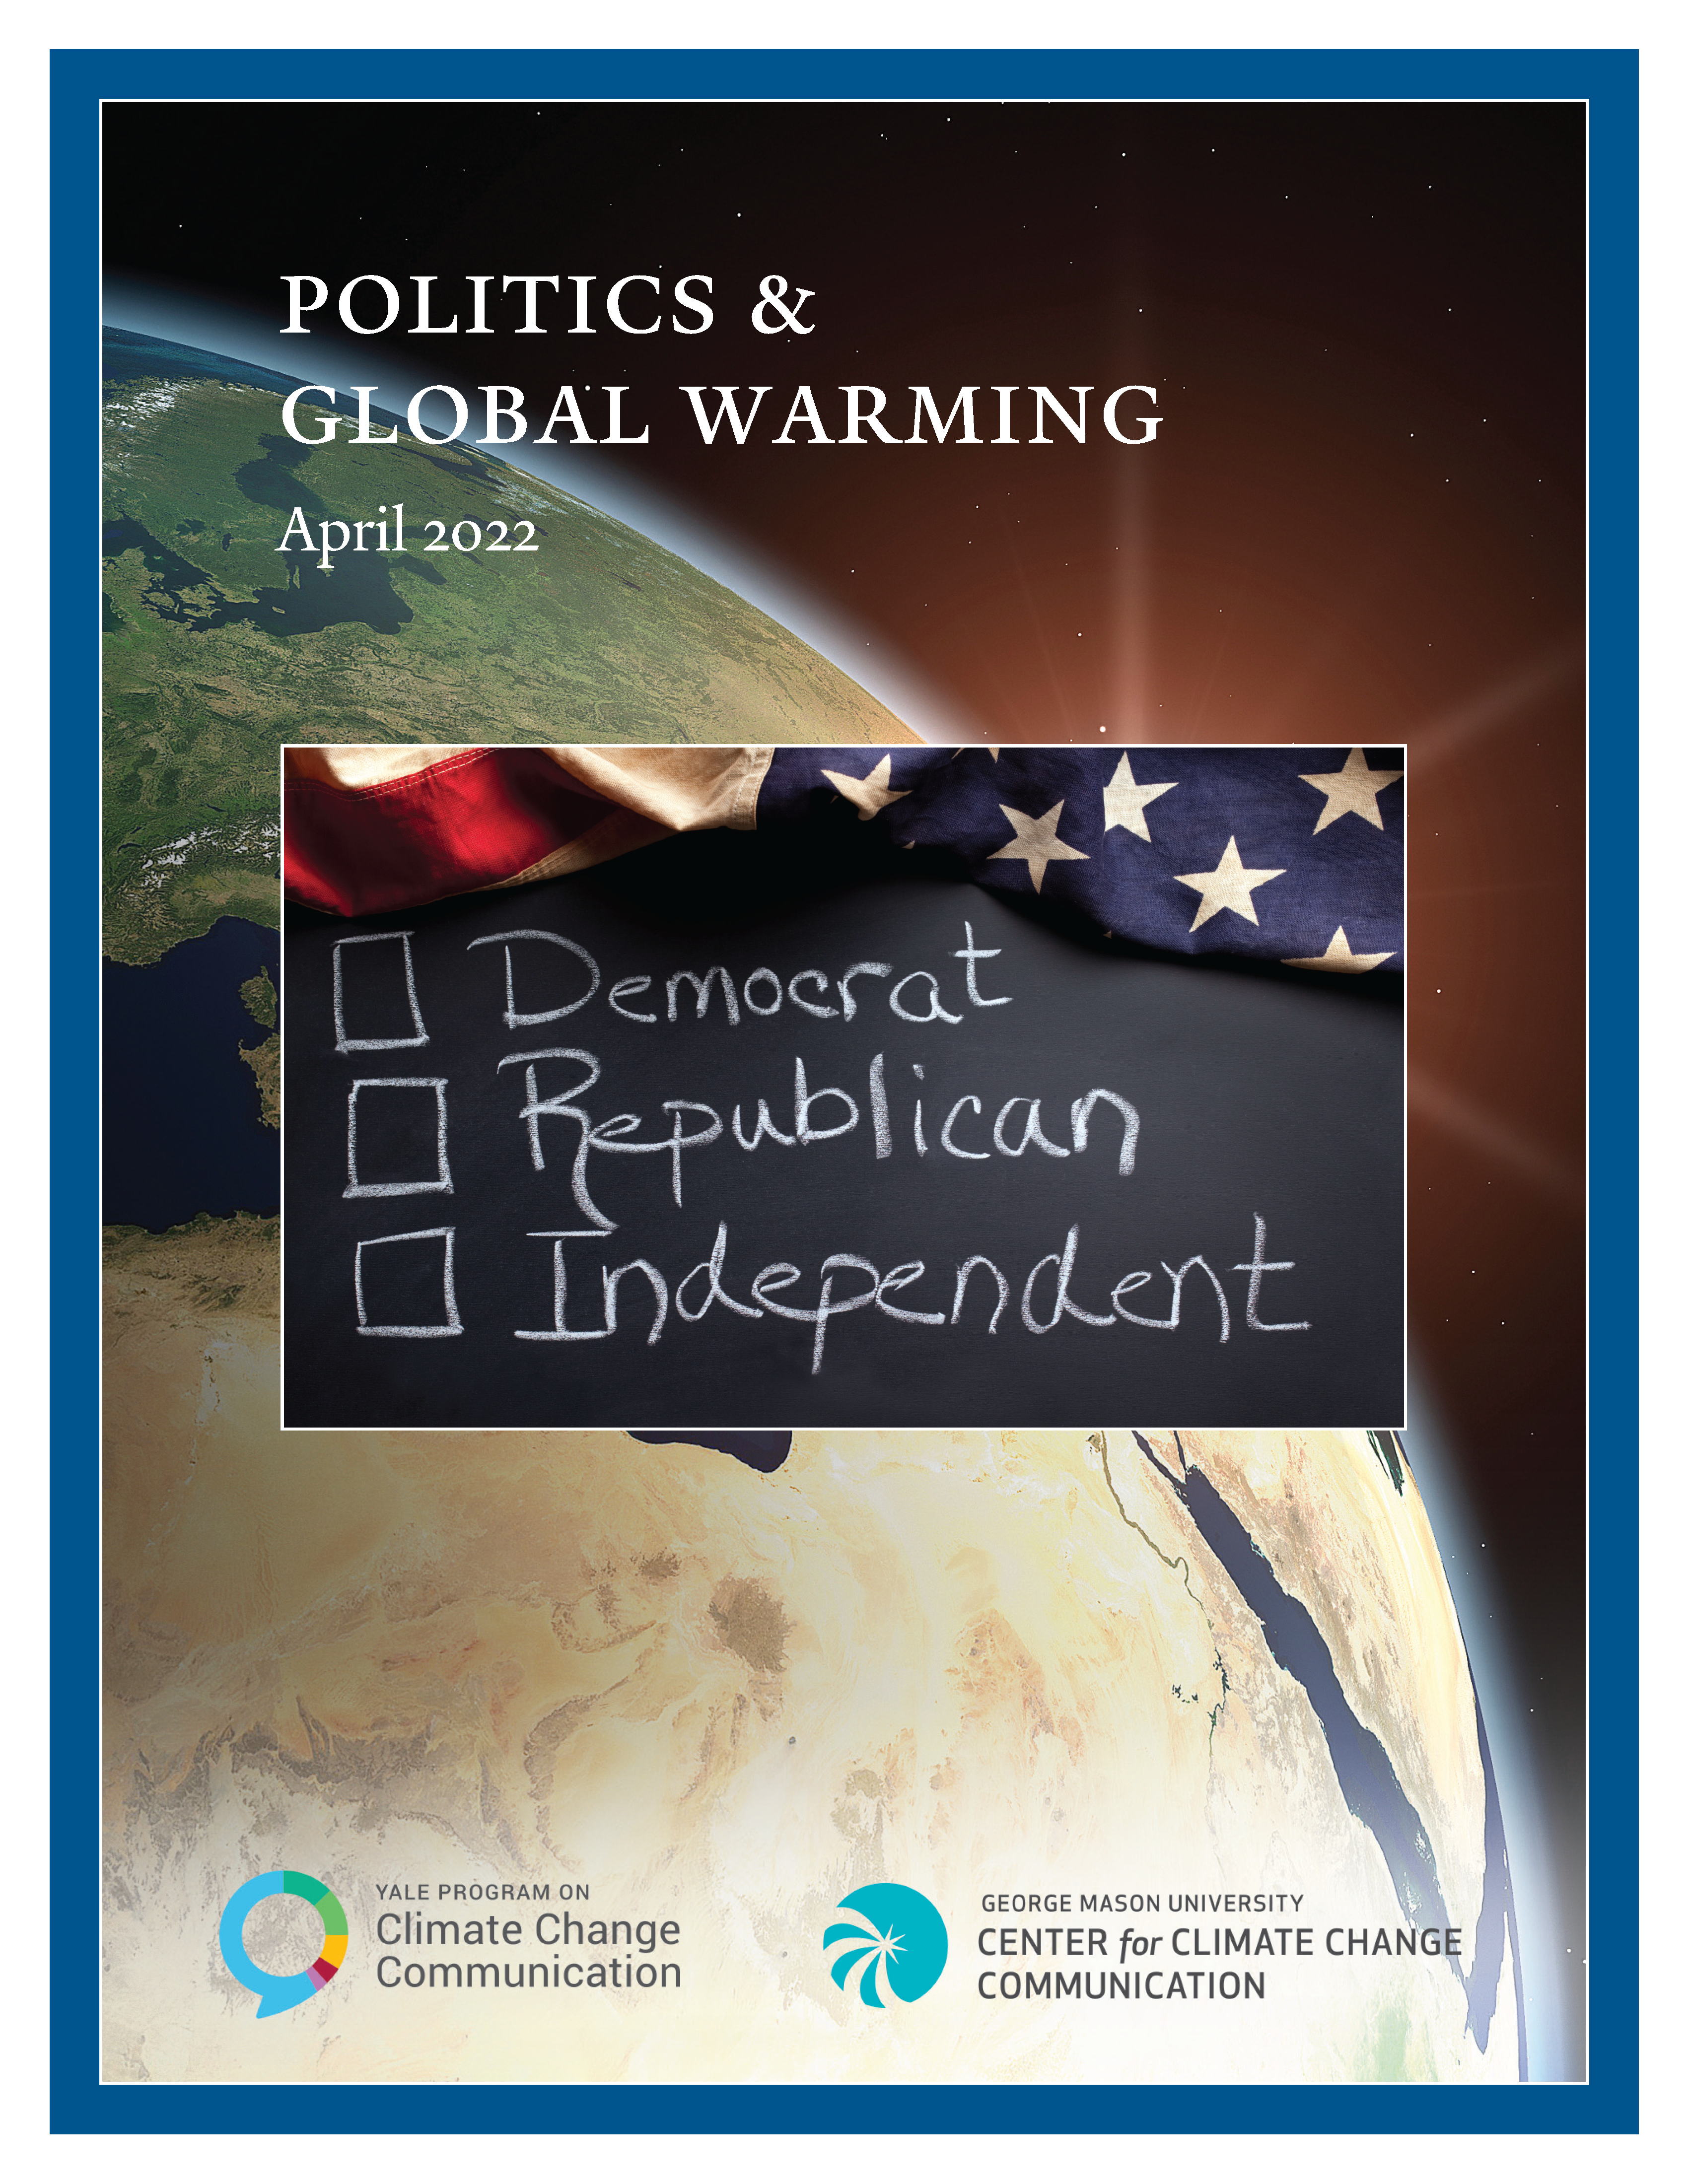 Politics & Global Warming, April 2022 - Yale Program on Climate